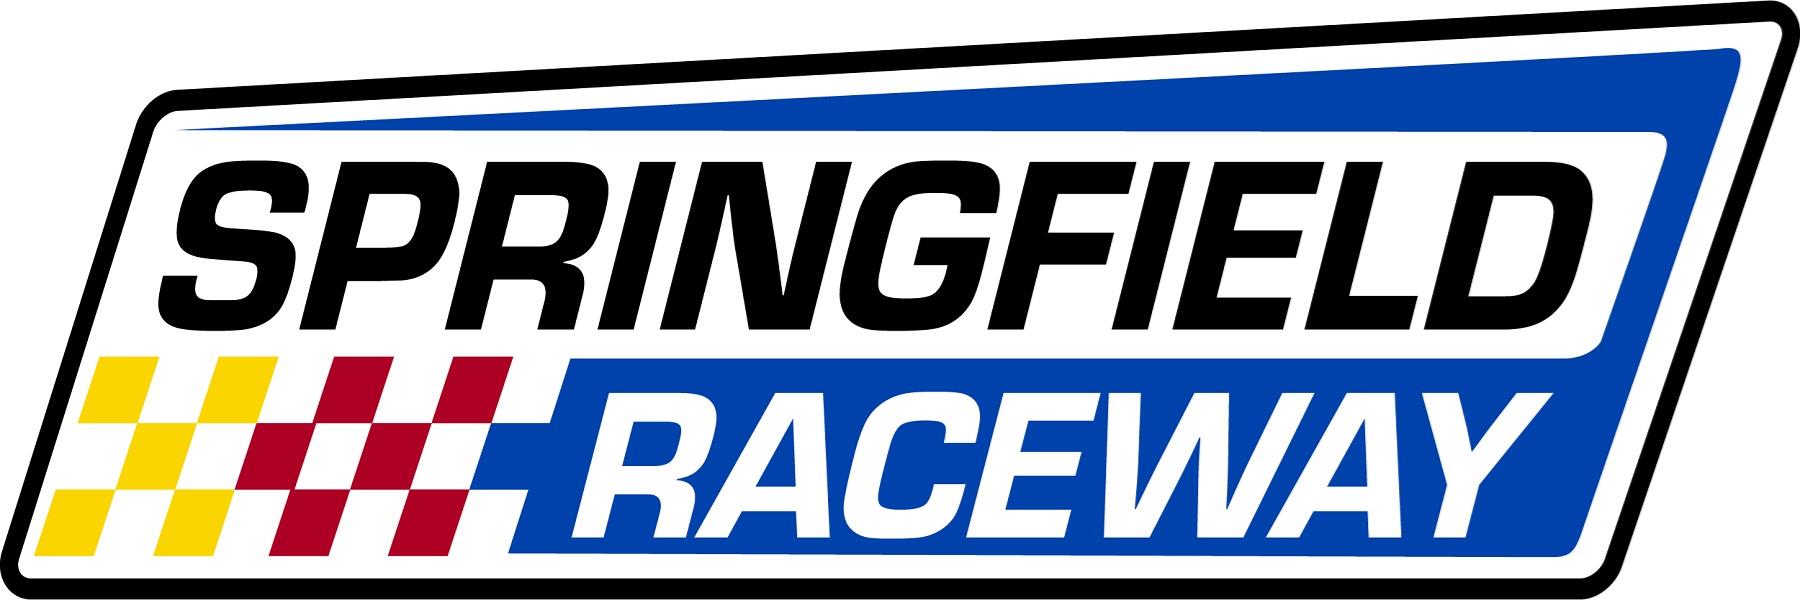 4/25/2021 - Springfield Raceway